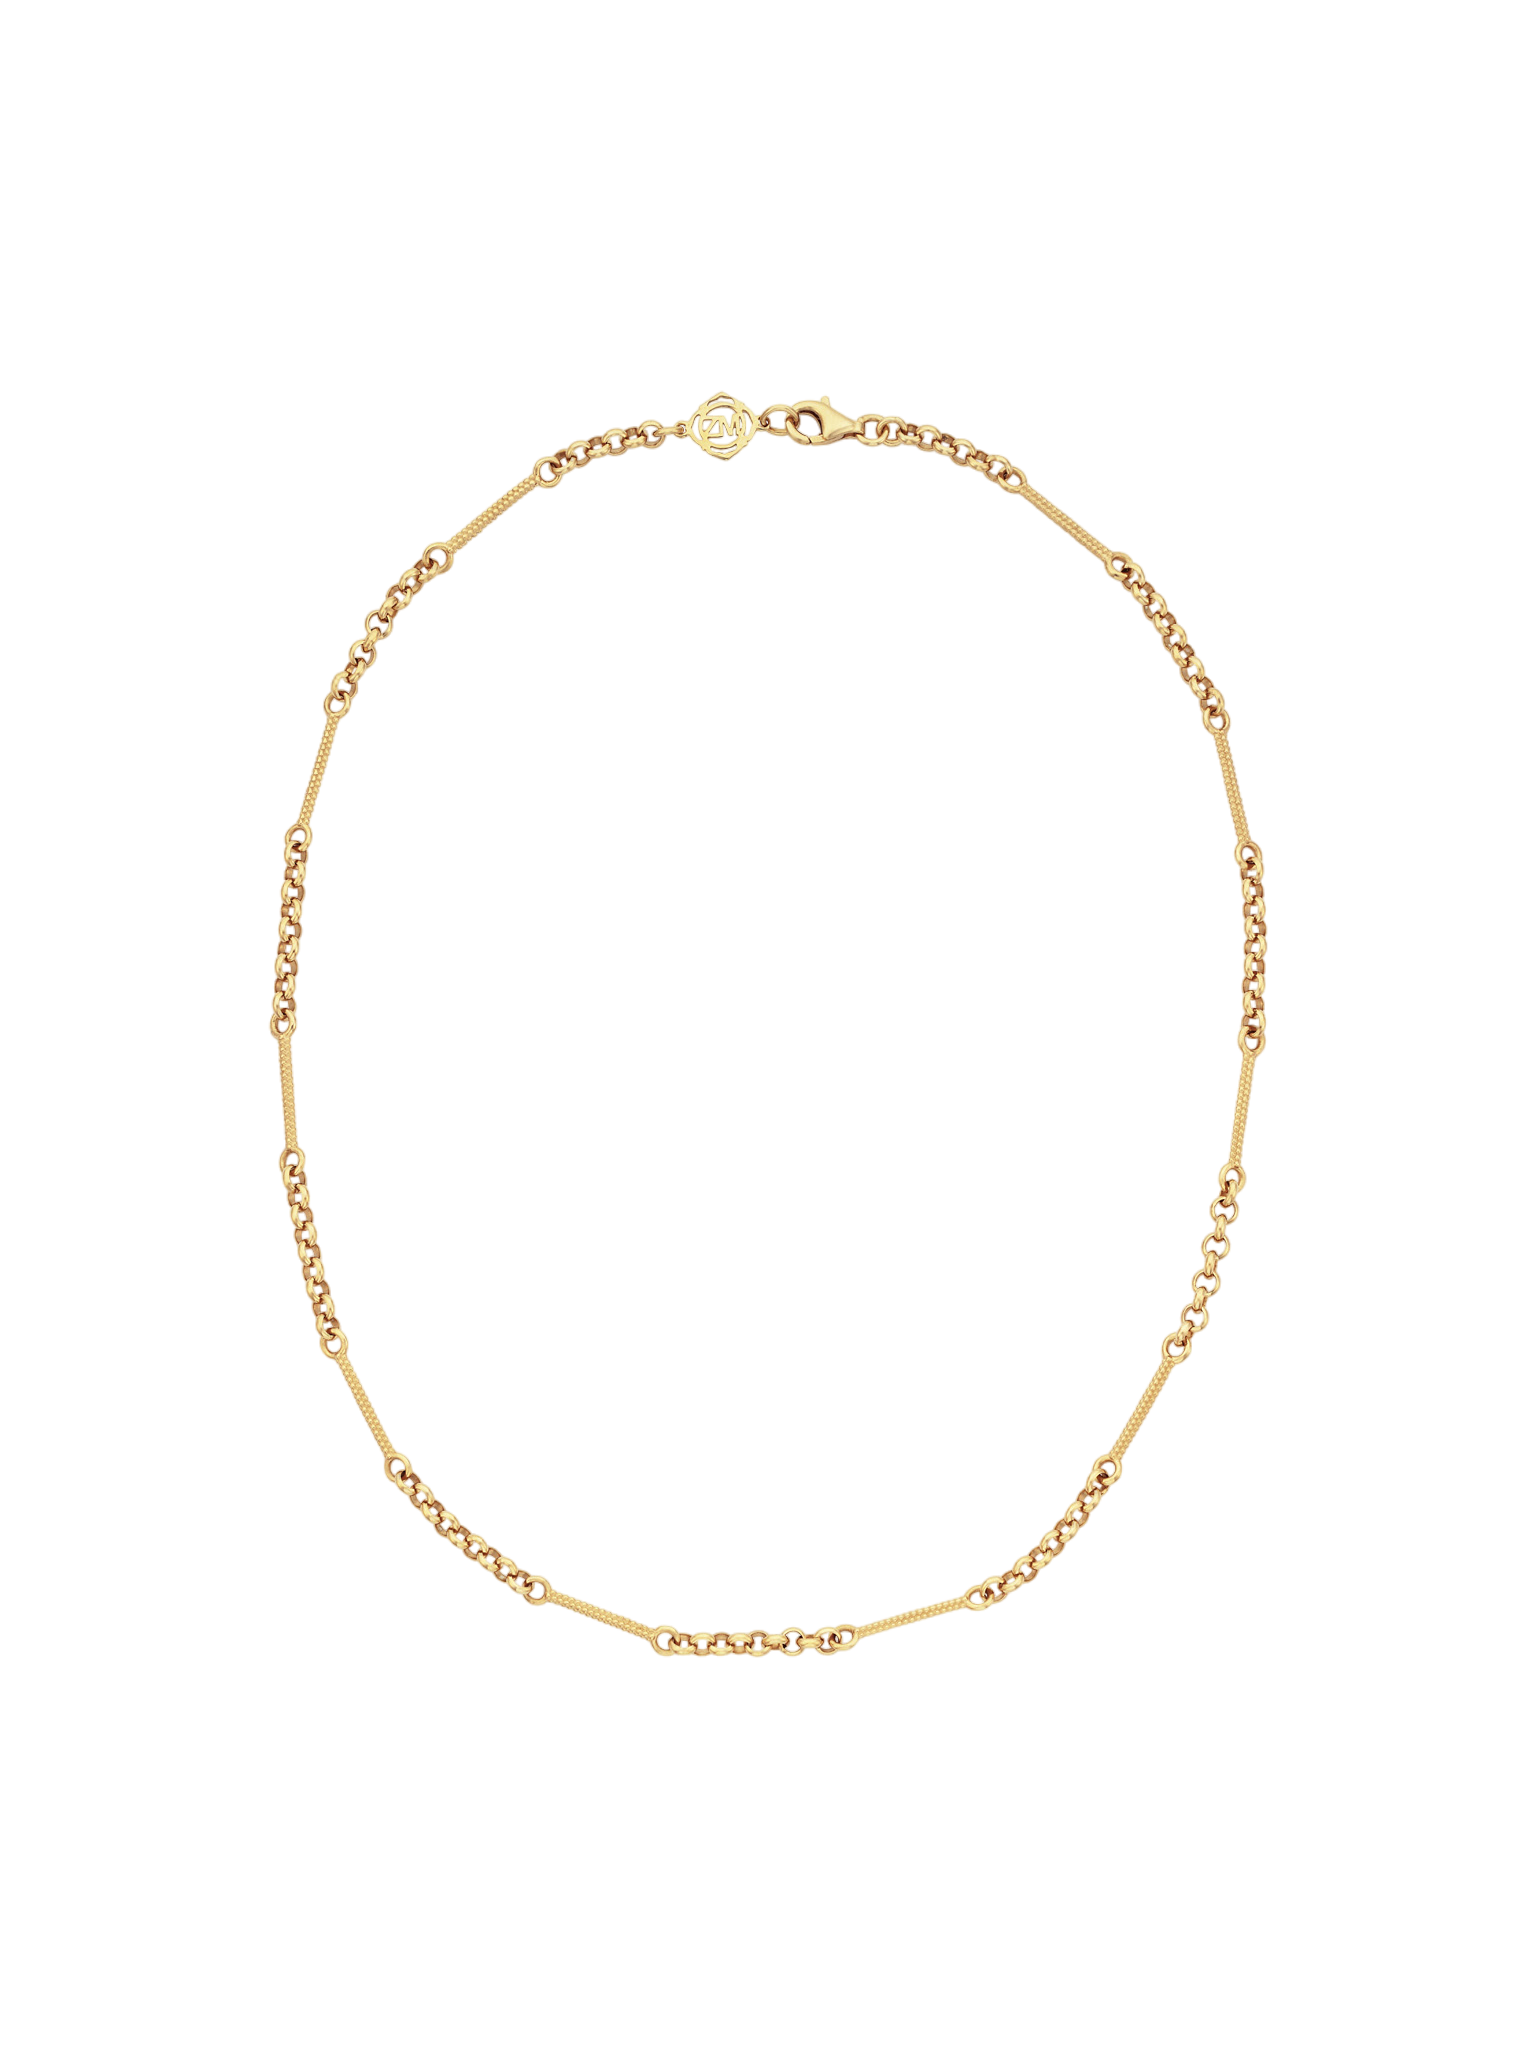 Poppy chain necklace